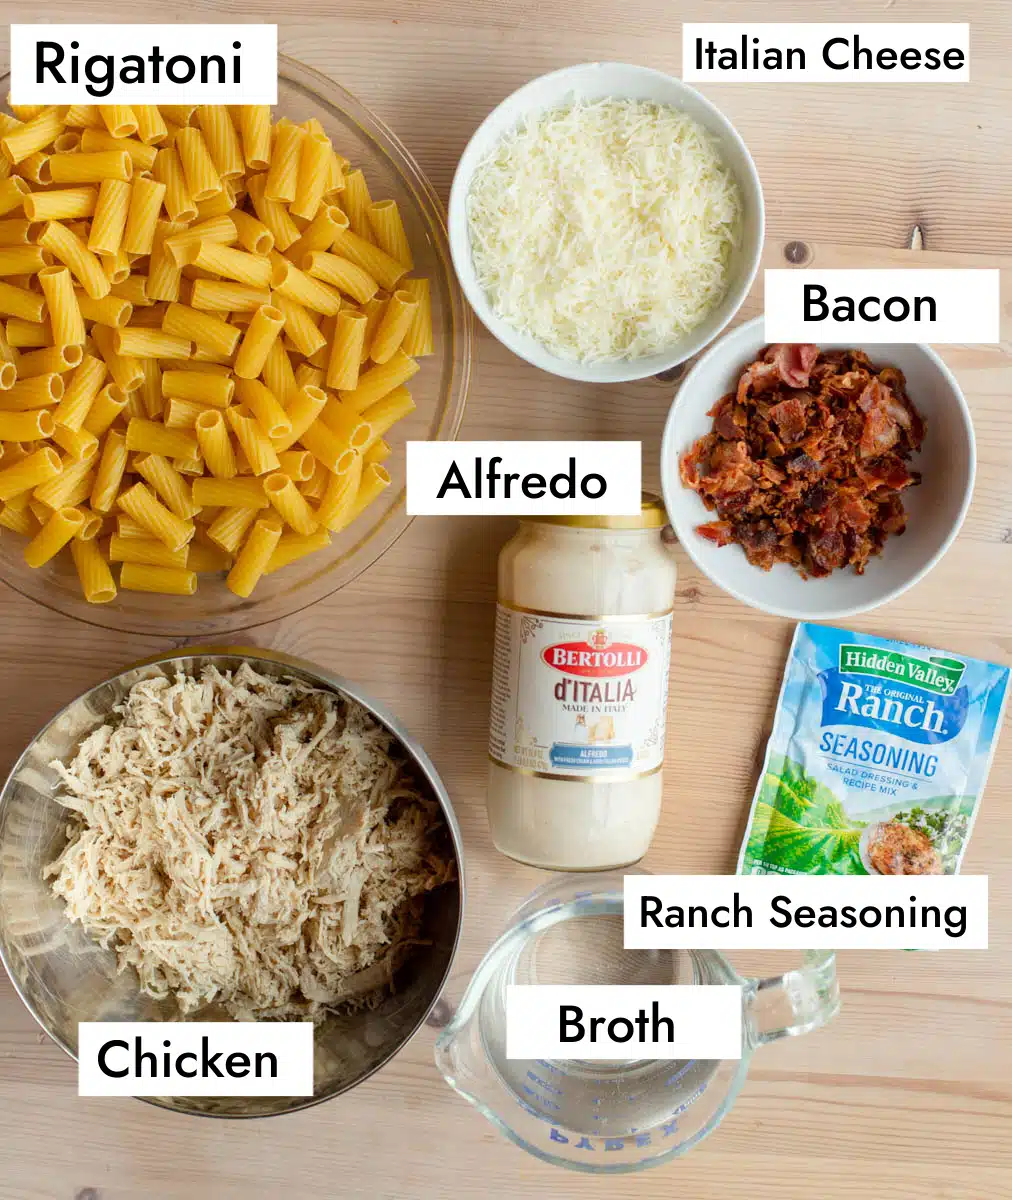 Ingredients in Chicken Bacon Ranch Pasta - rigatoni pasta, Italian cheese, bacon, Alfredo sauce, ranch seasoning, shredded chicken, and broth. 